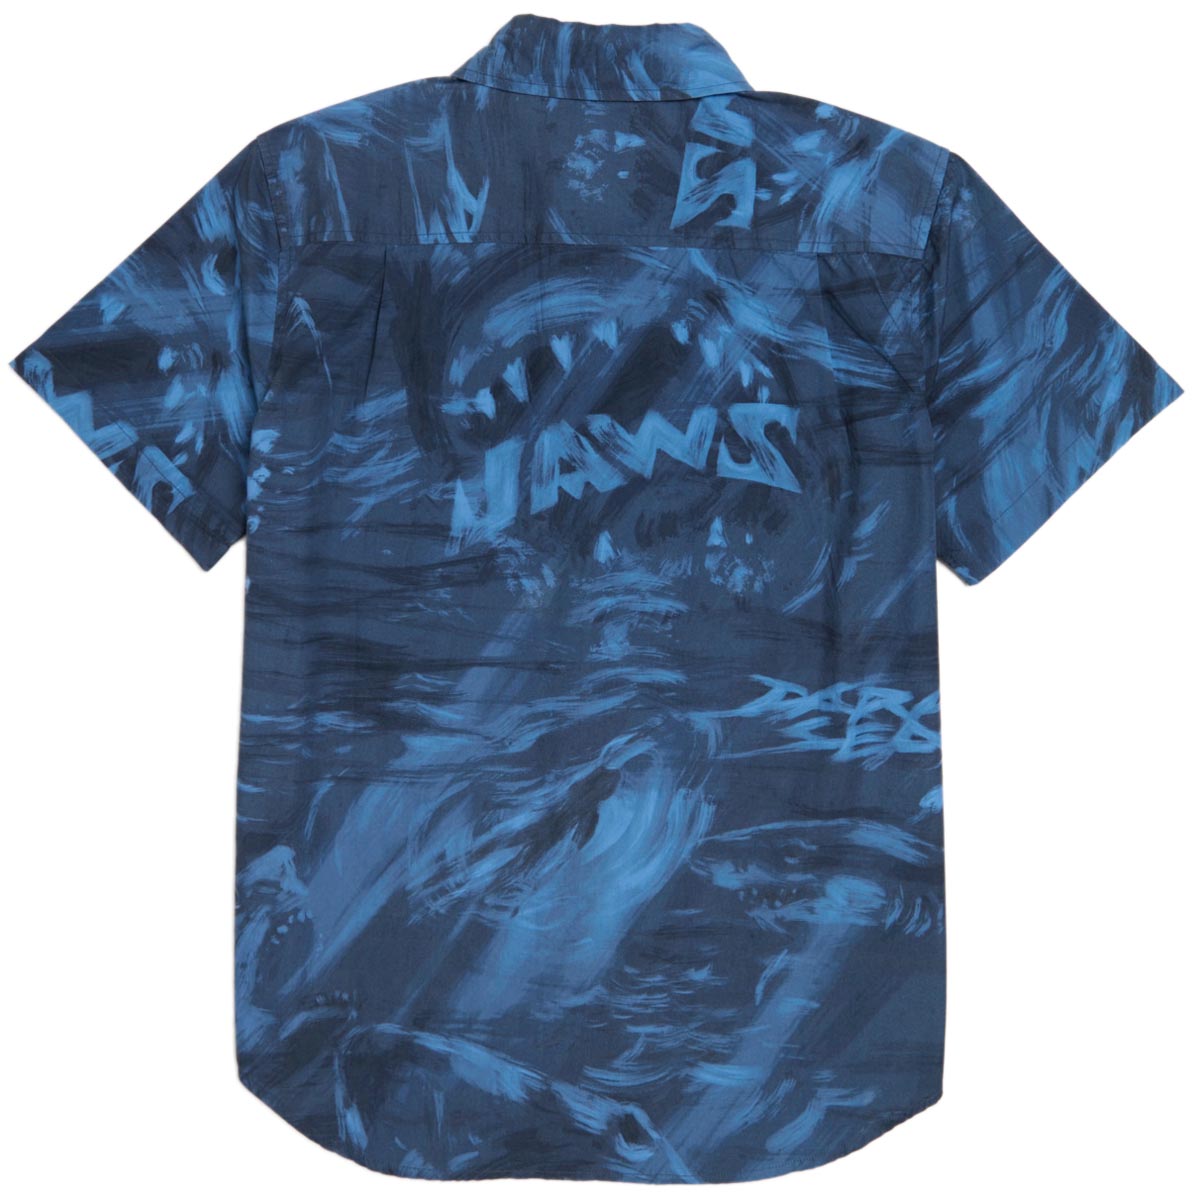 Dark Seas x Jaws Watkins Shirt - Navy image 2